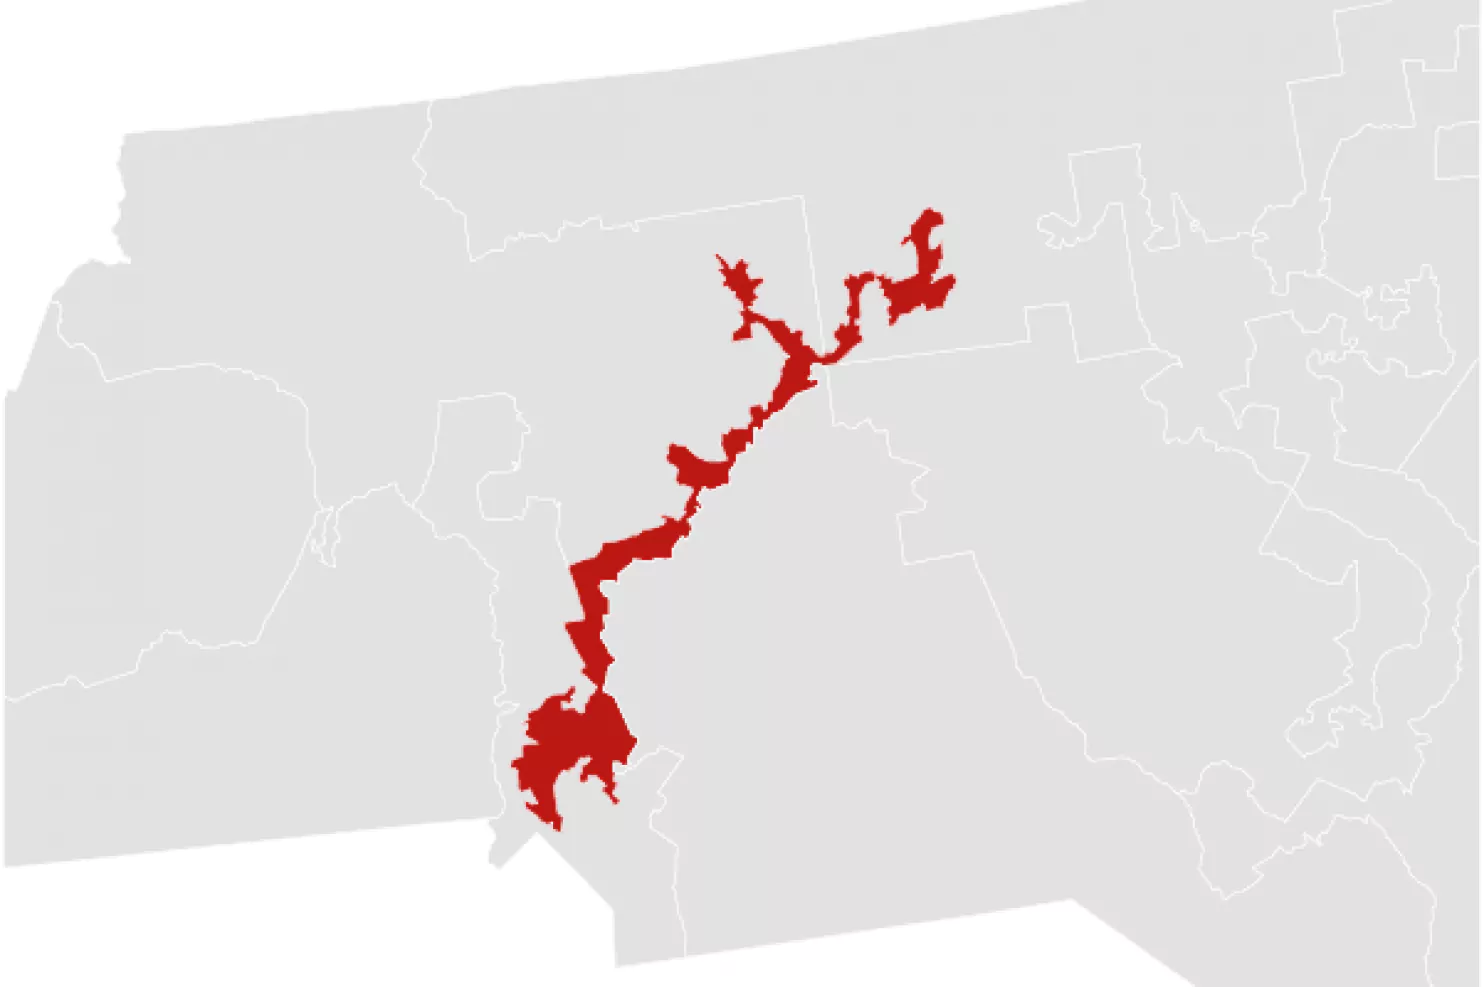 North Carolina's 12th district